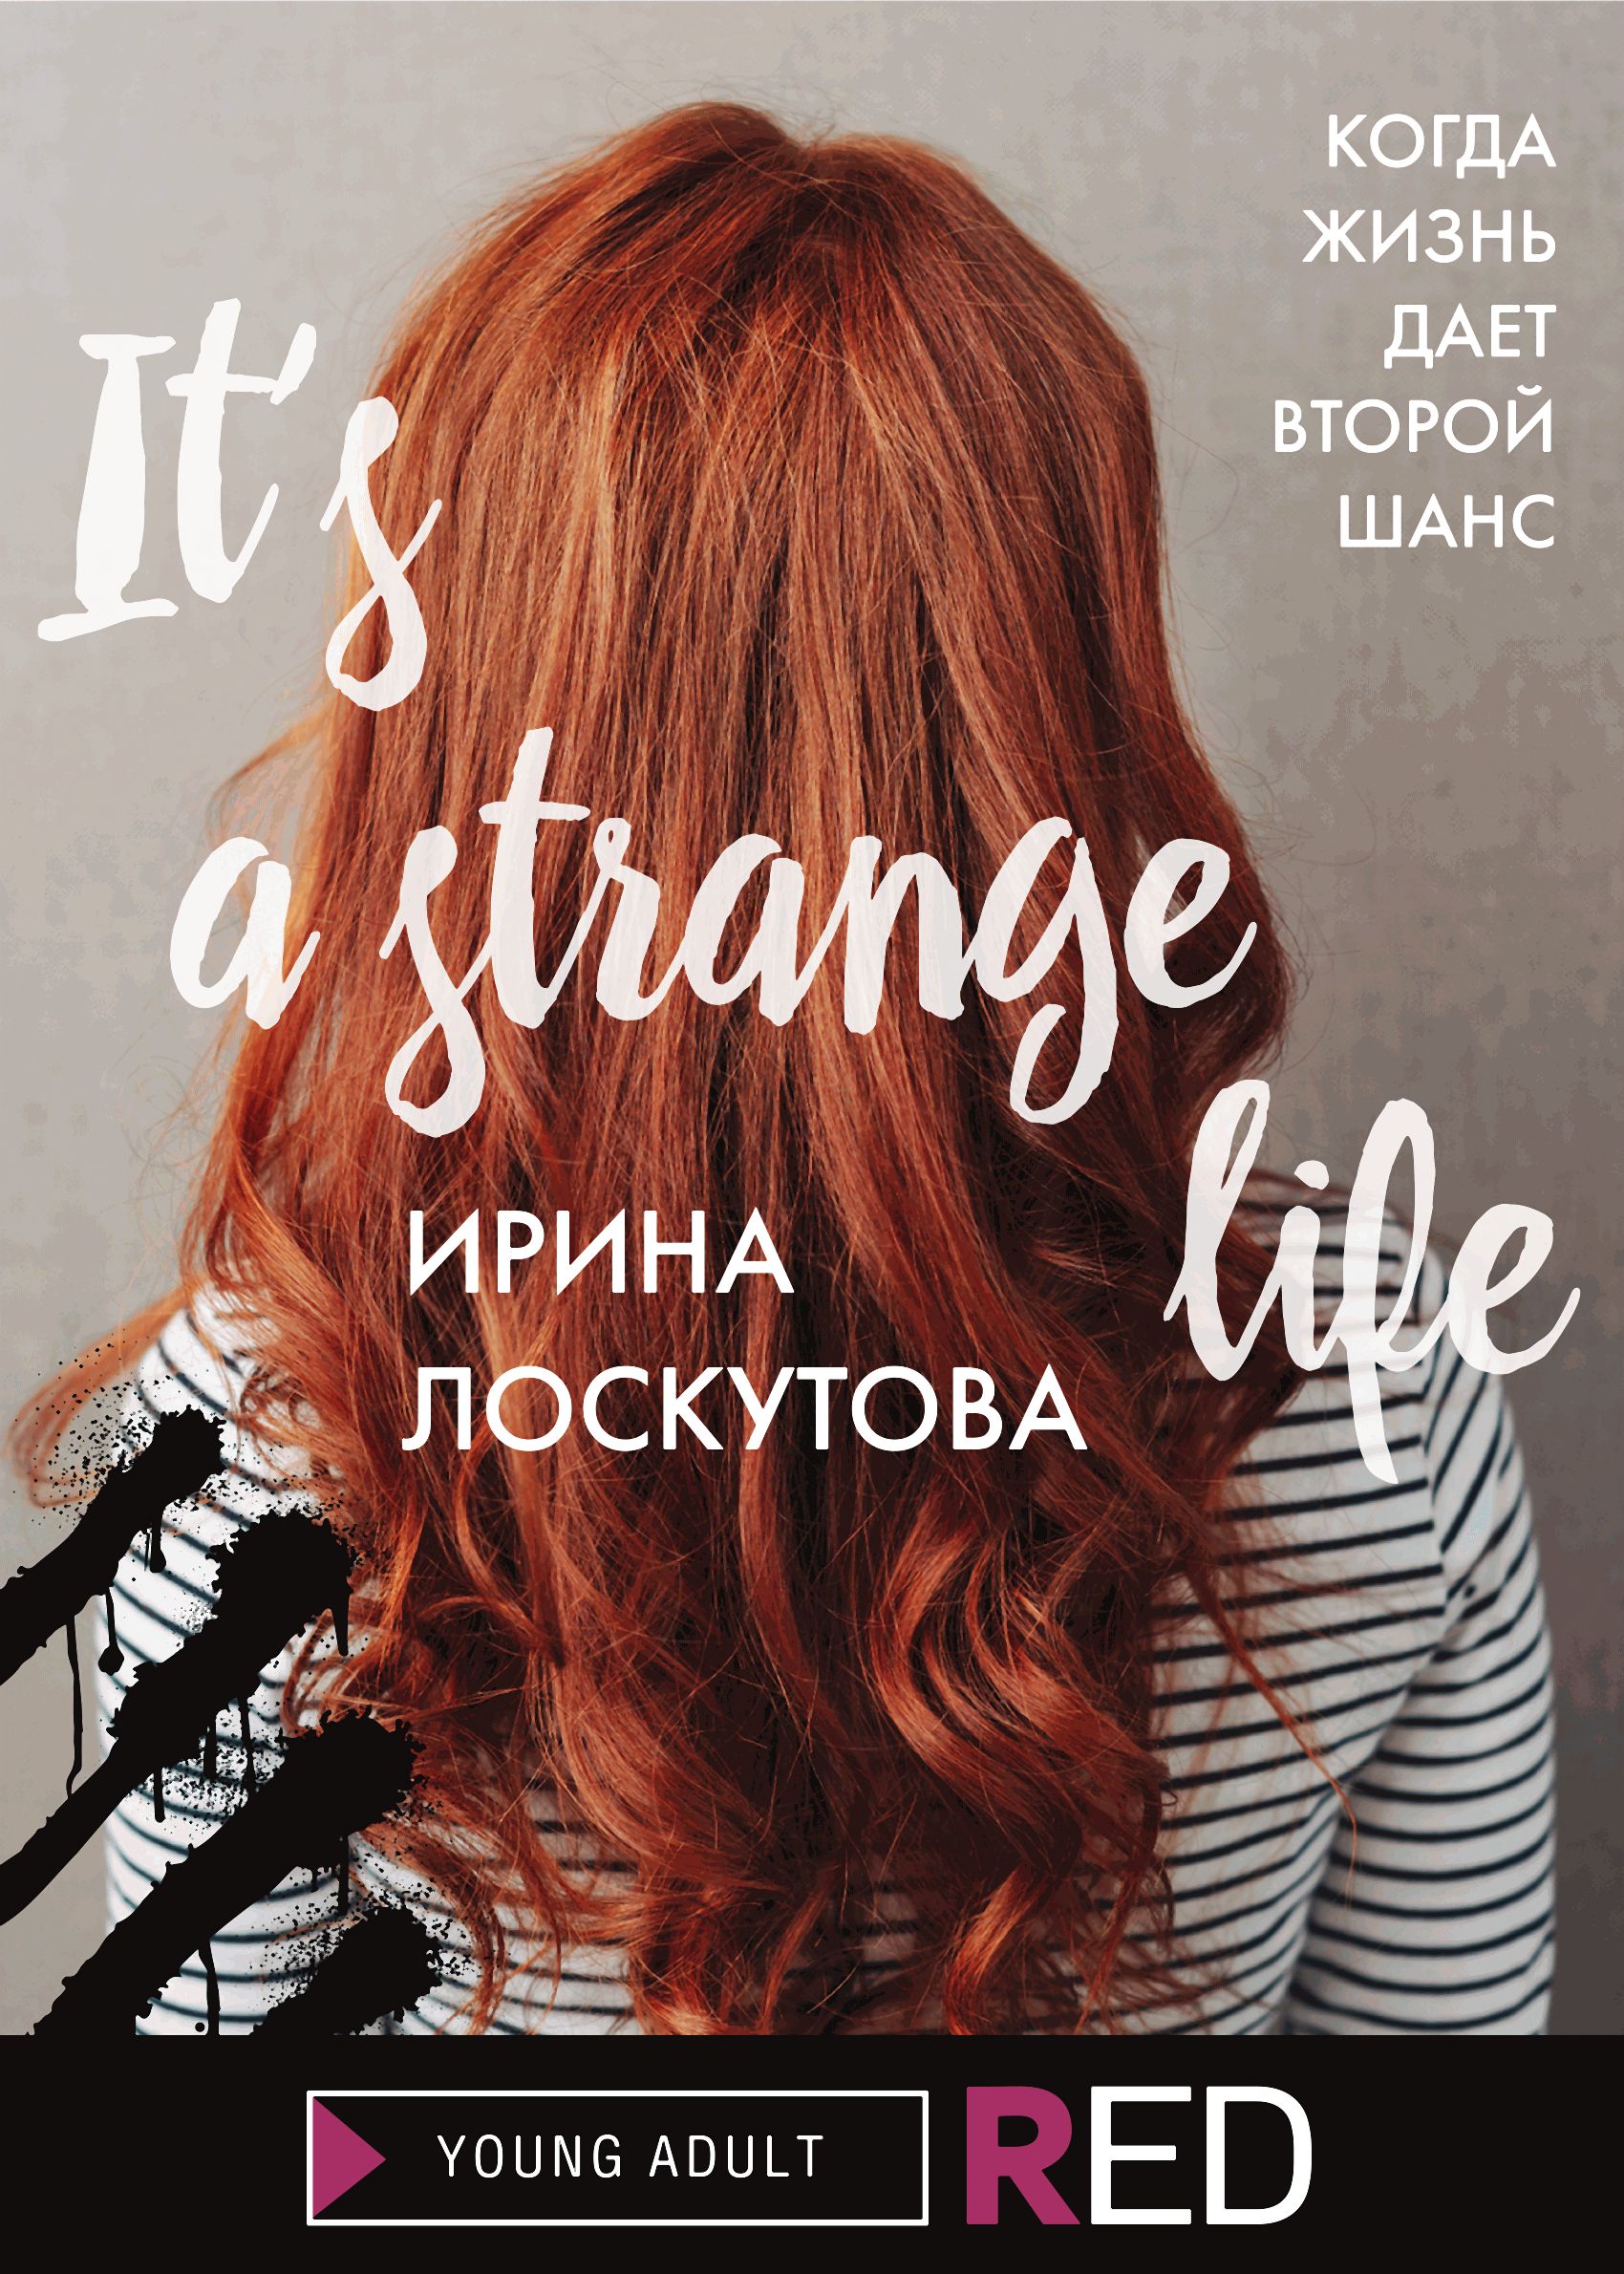 It’s a strange life читать онлайн